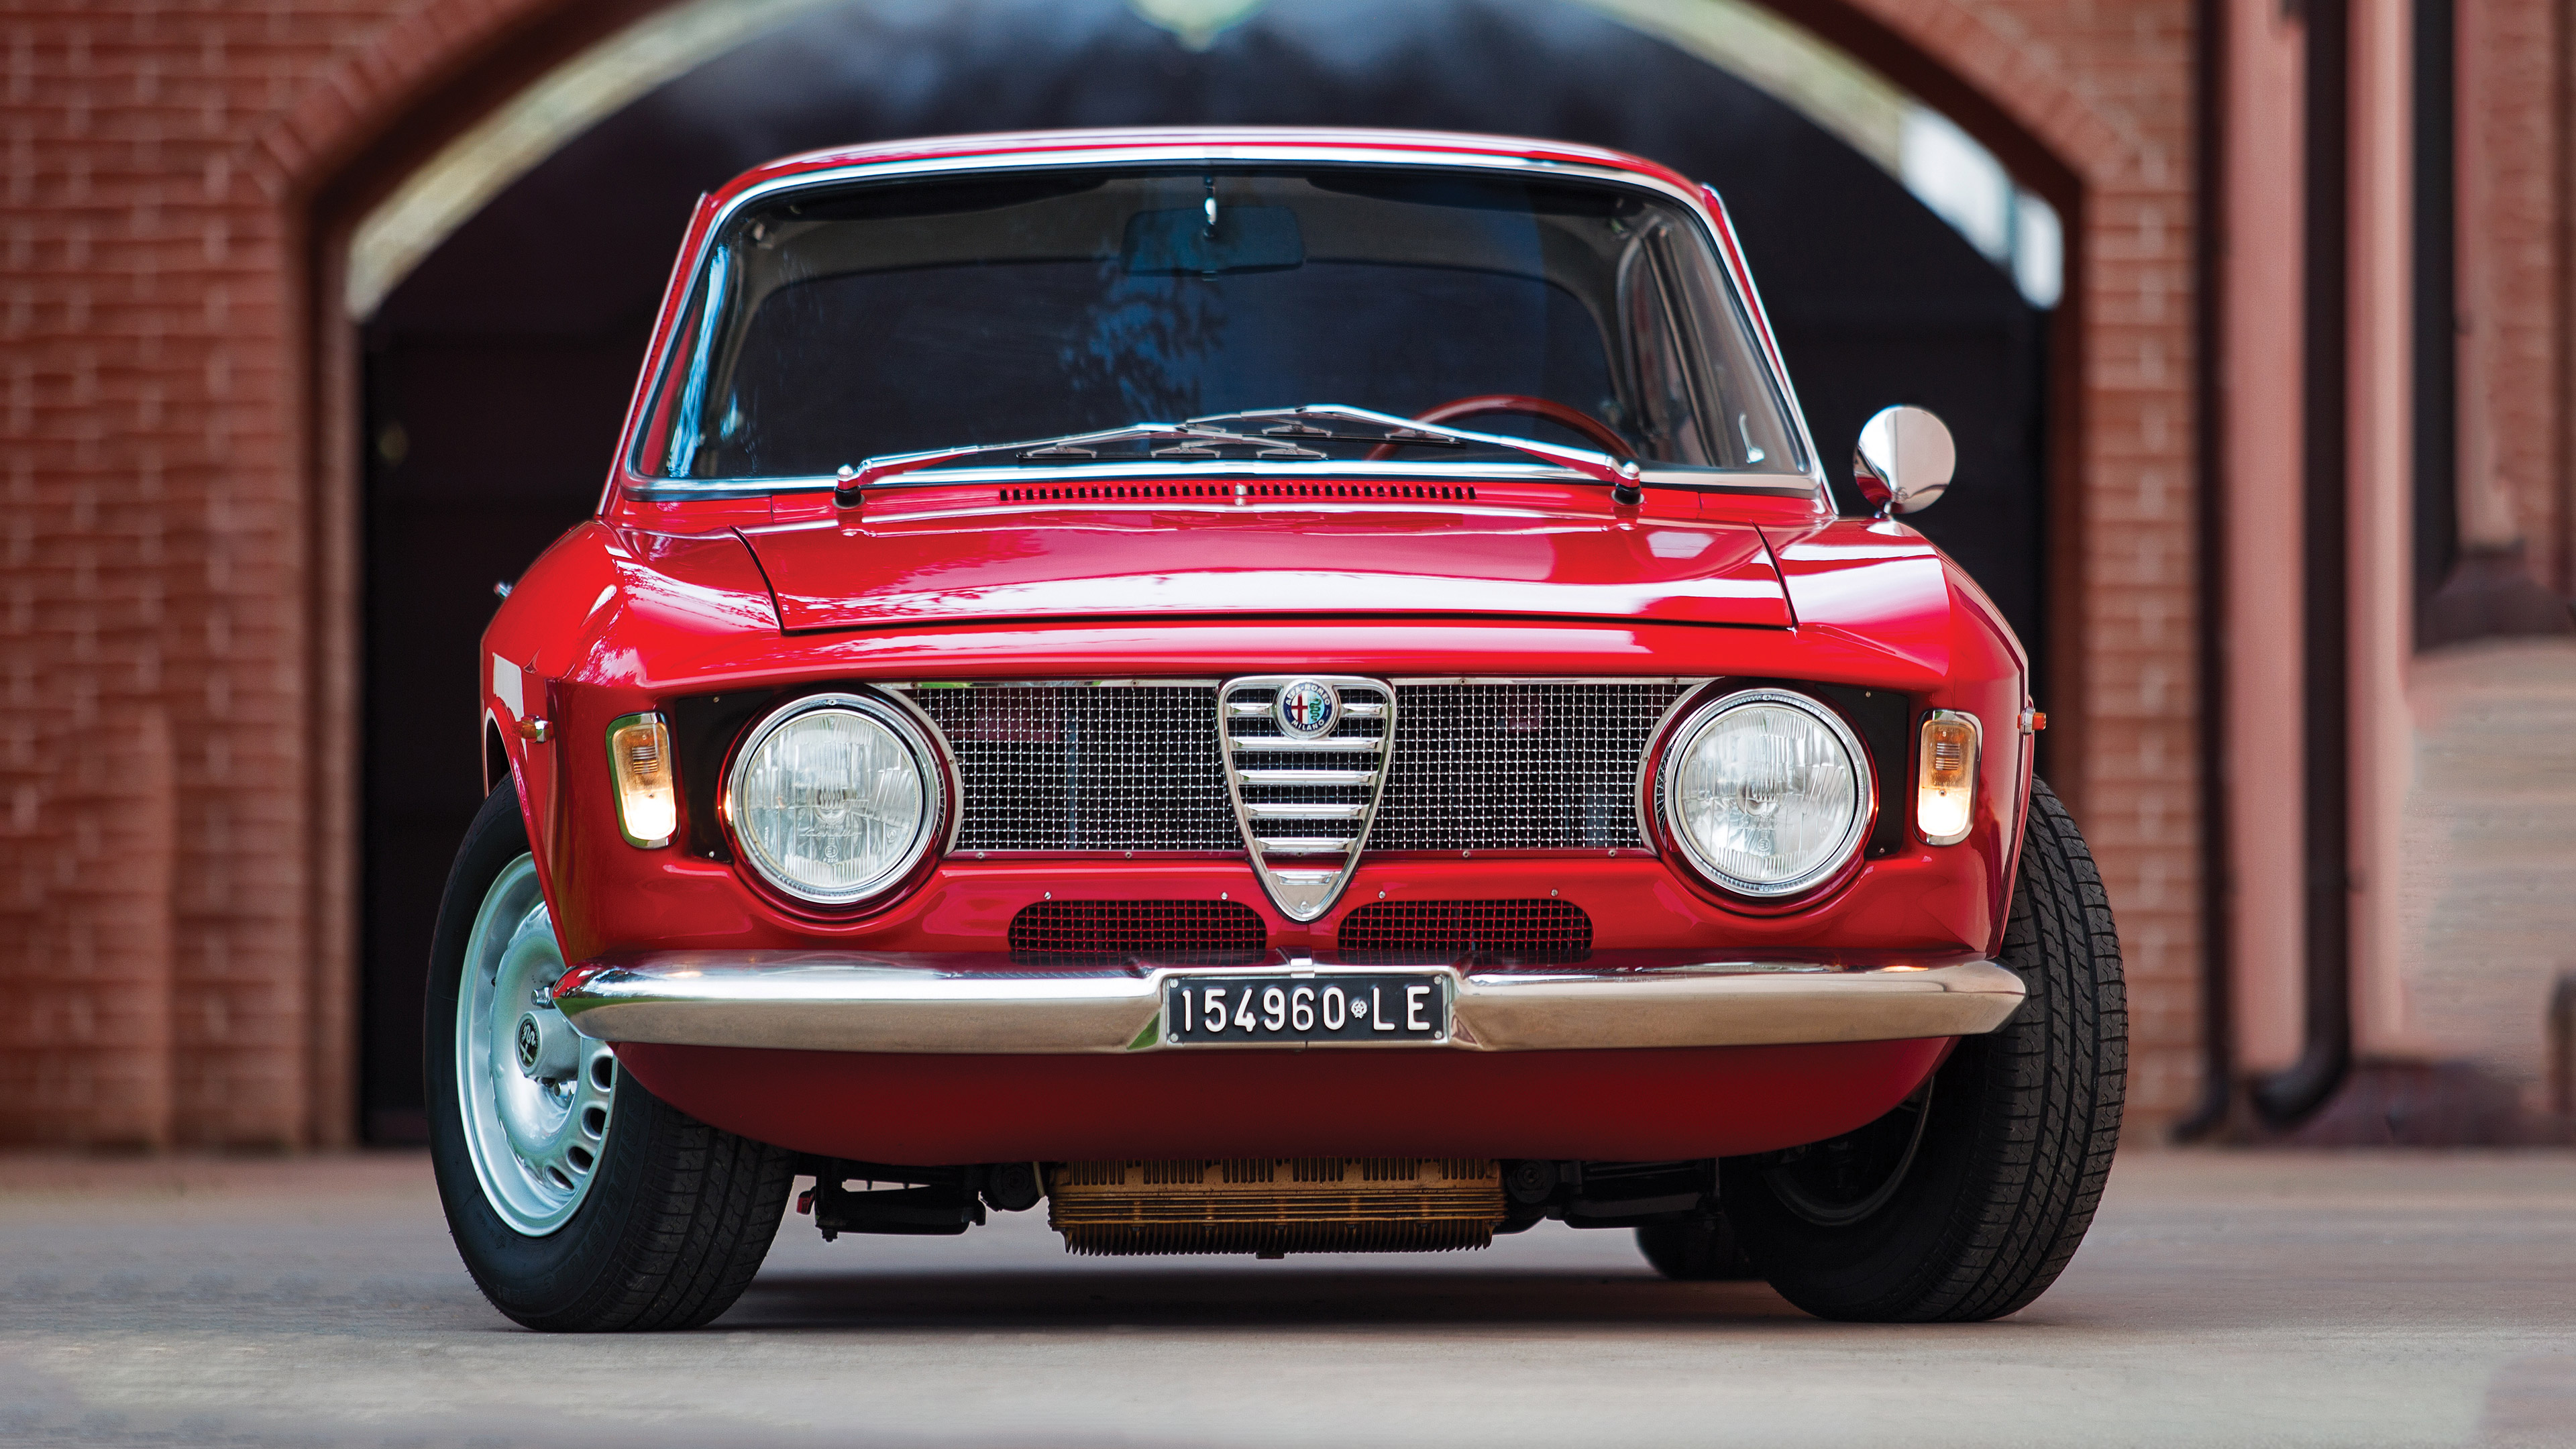  1965 Alfa Romeo Giulia GTA Wallpaper.